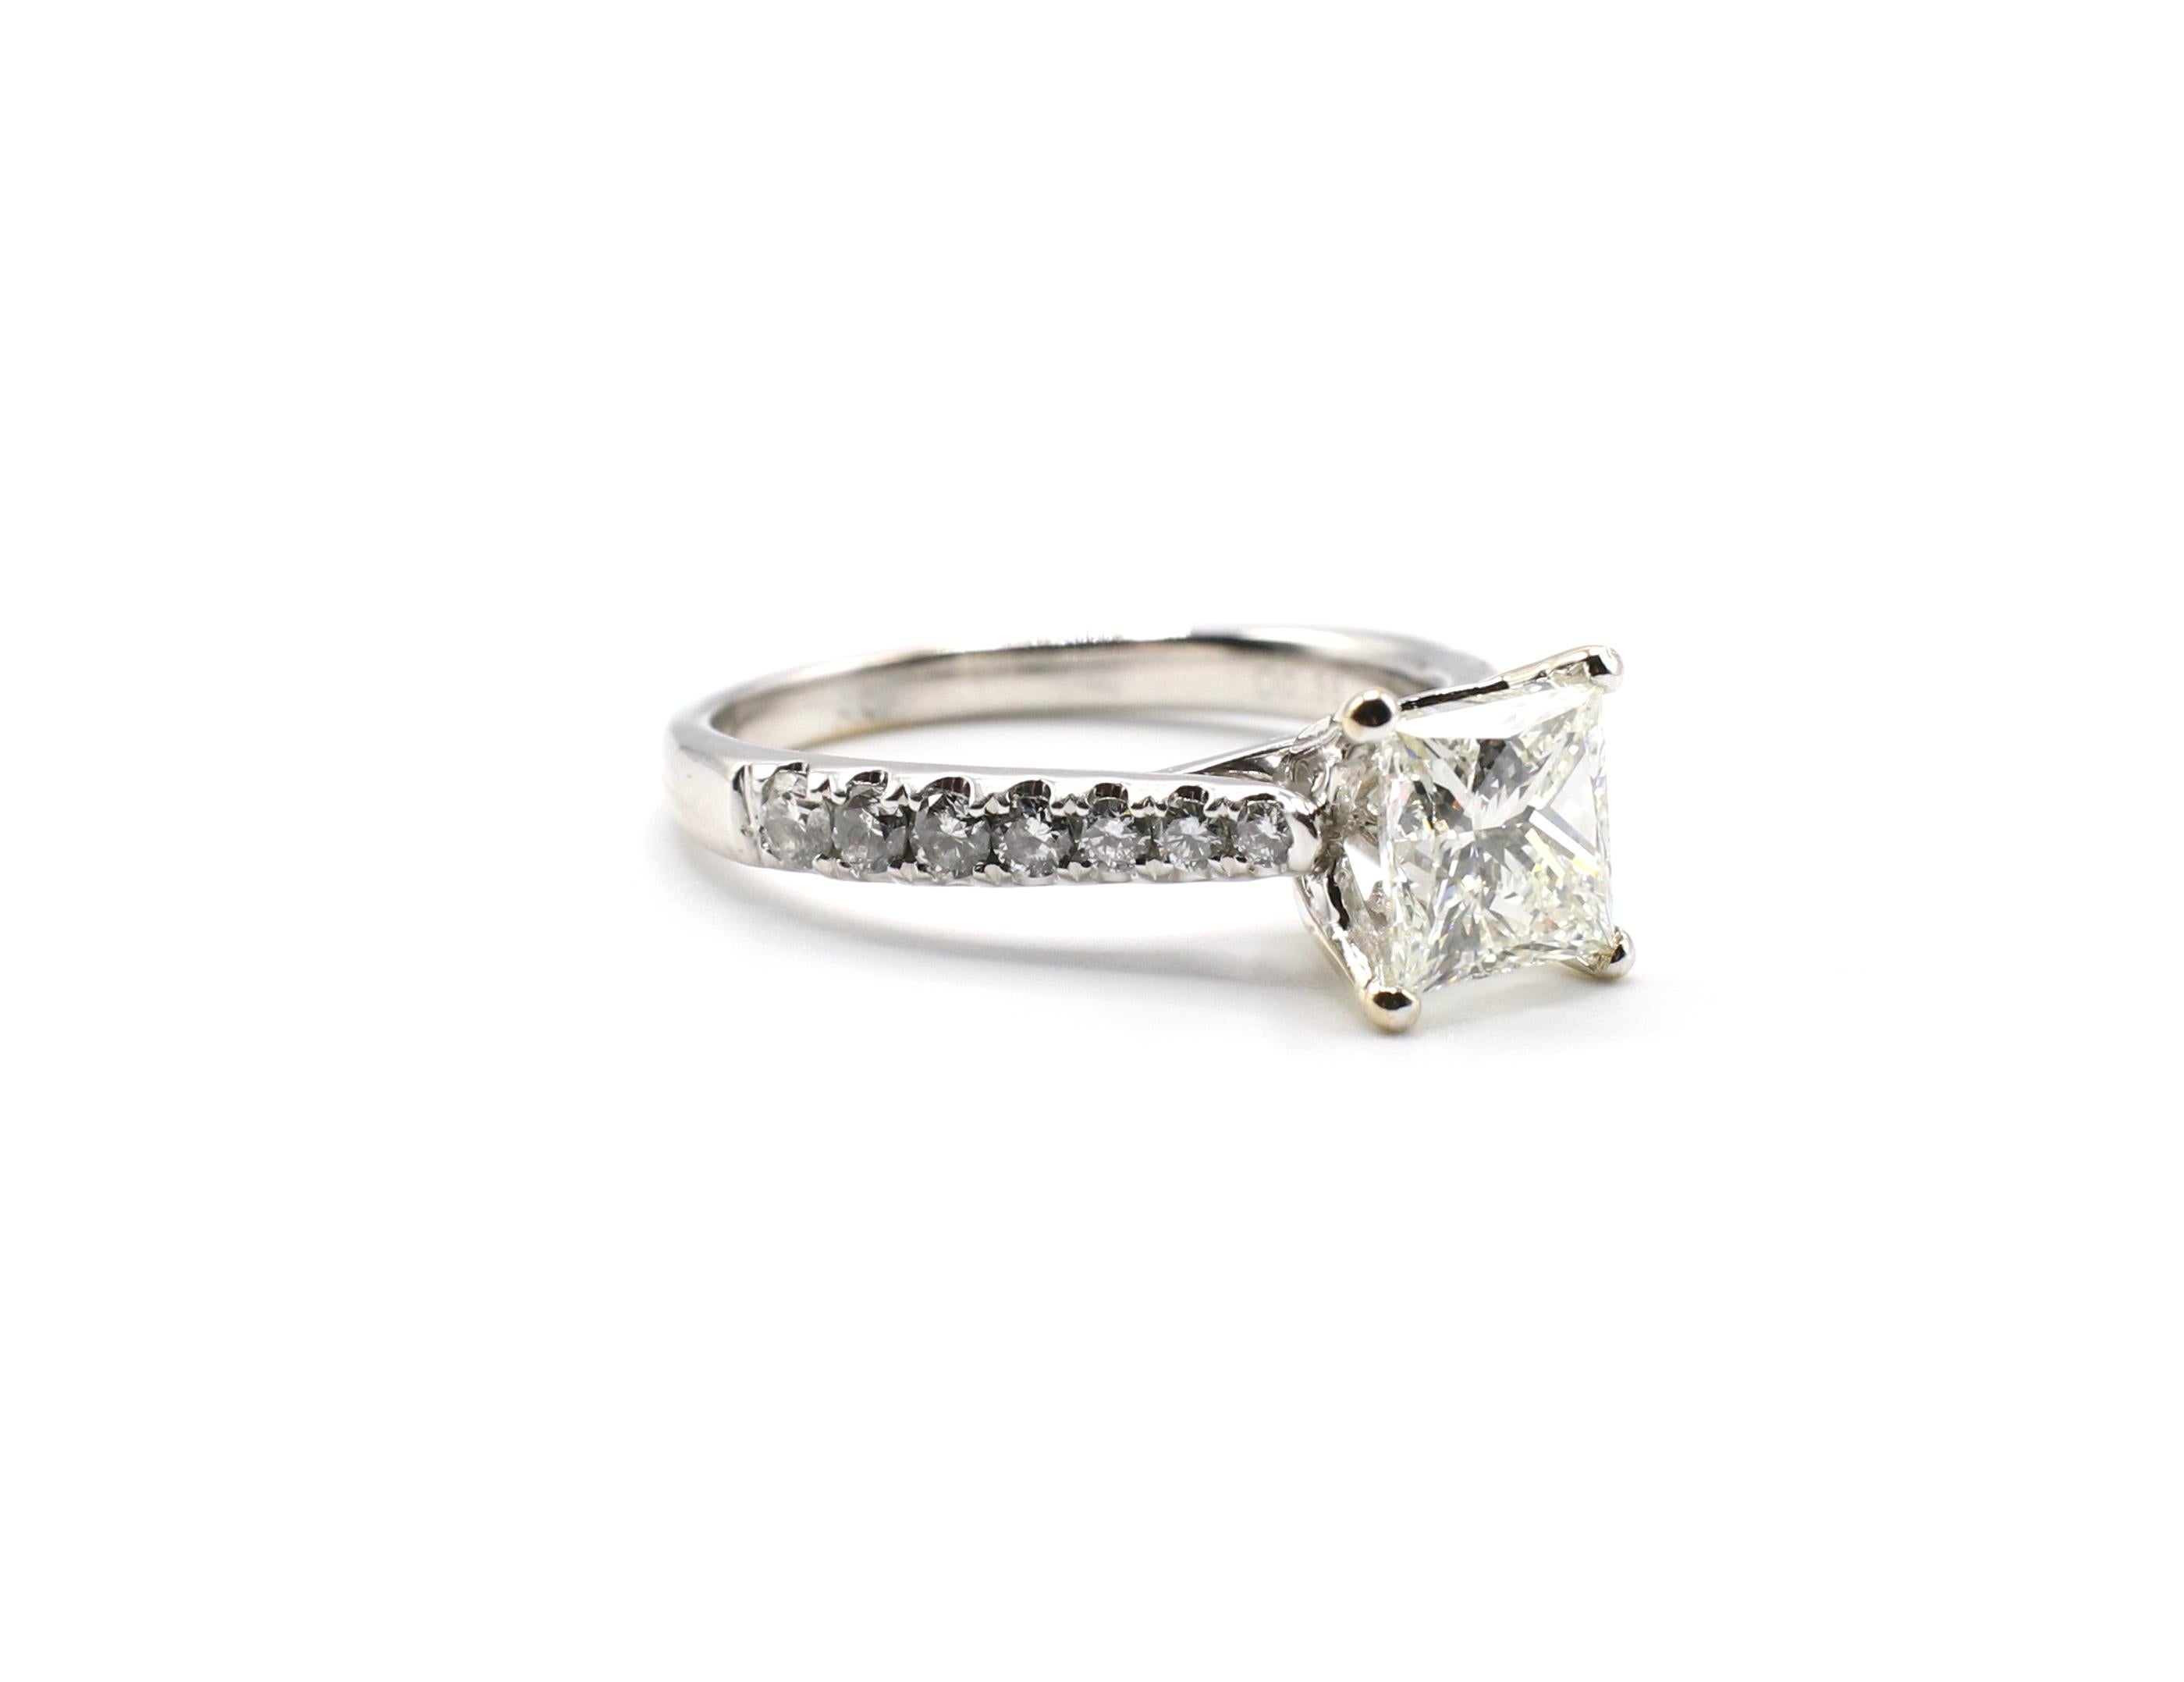 IGI Certified LEO Princess Cut Square Modified Brilliant Cut 1.48ct I VS1 18K White Gold Diamond Engagement Ring Size 6.5

I.G.I. COA # 3085908U (please note original IGI certificate pictured for details)
